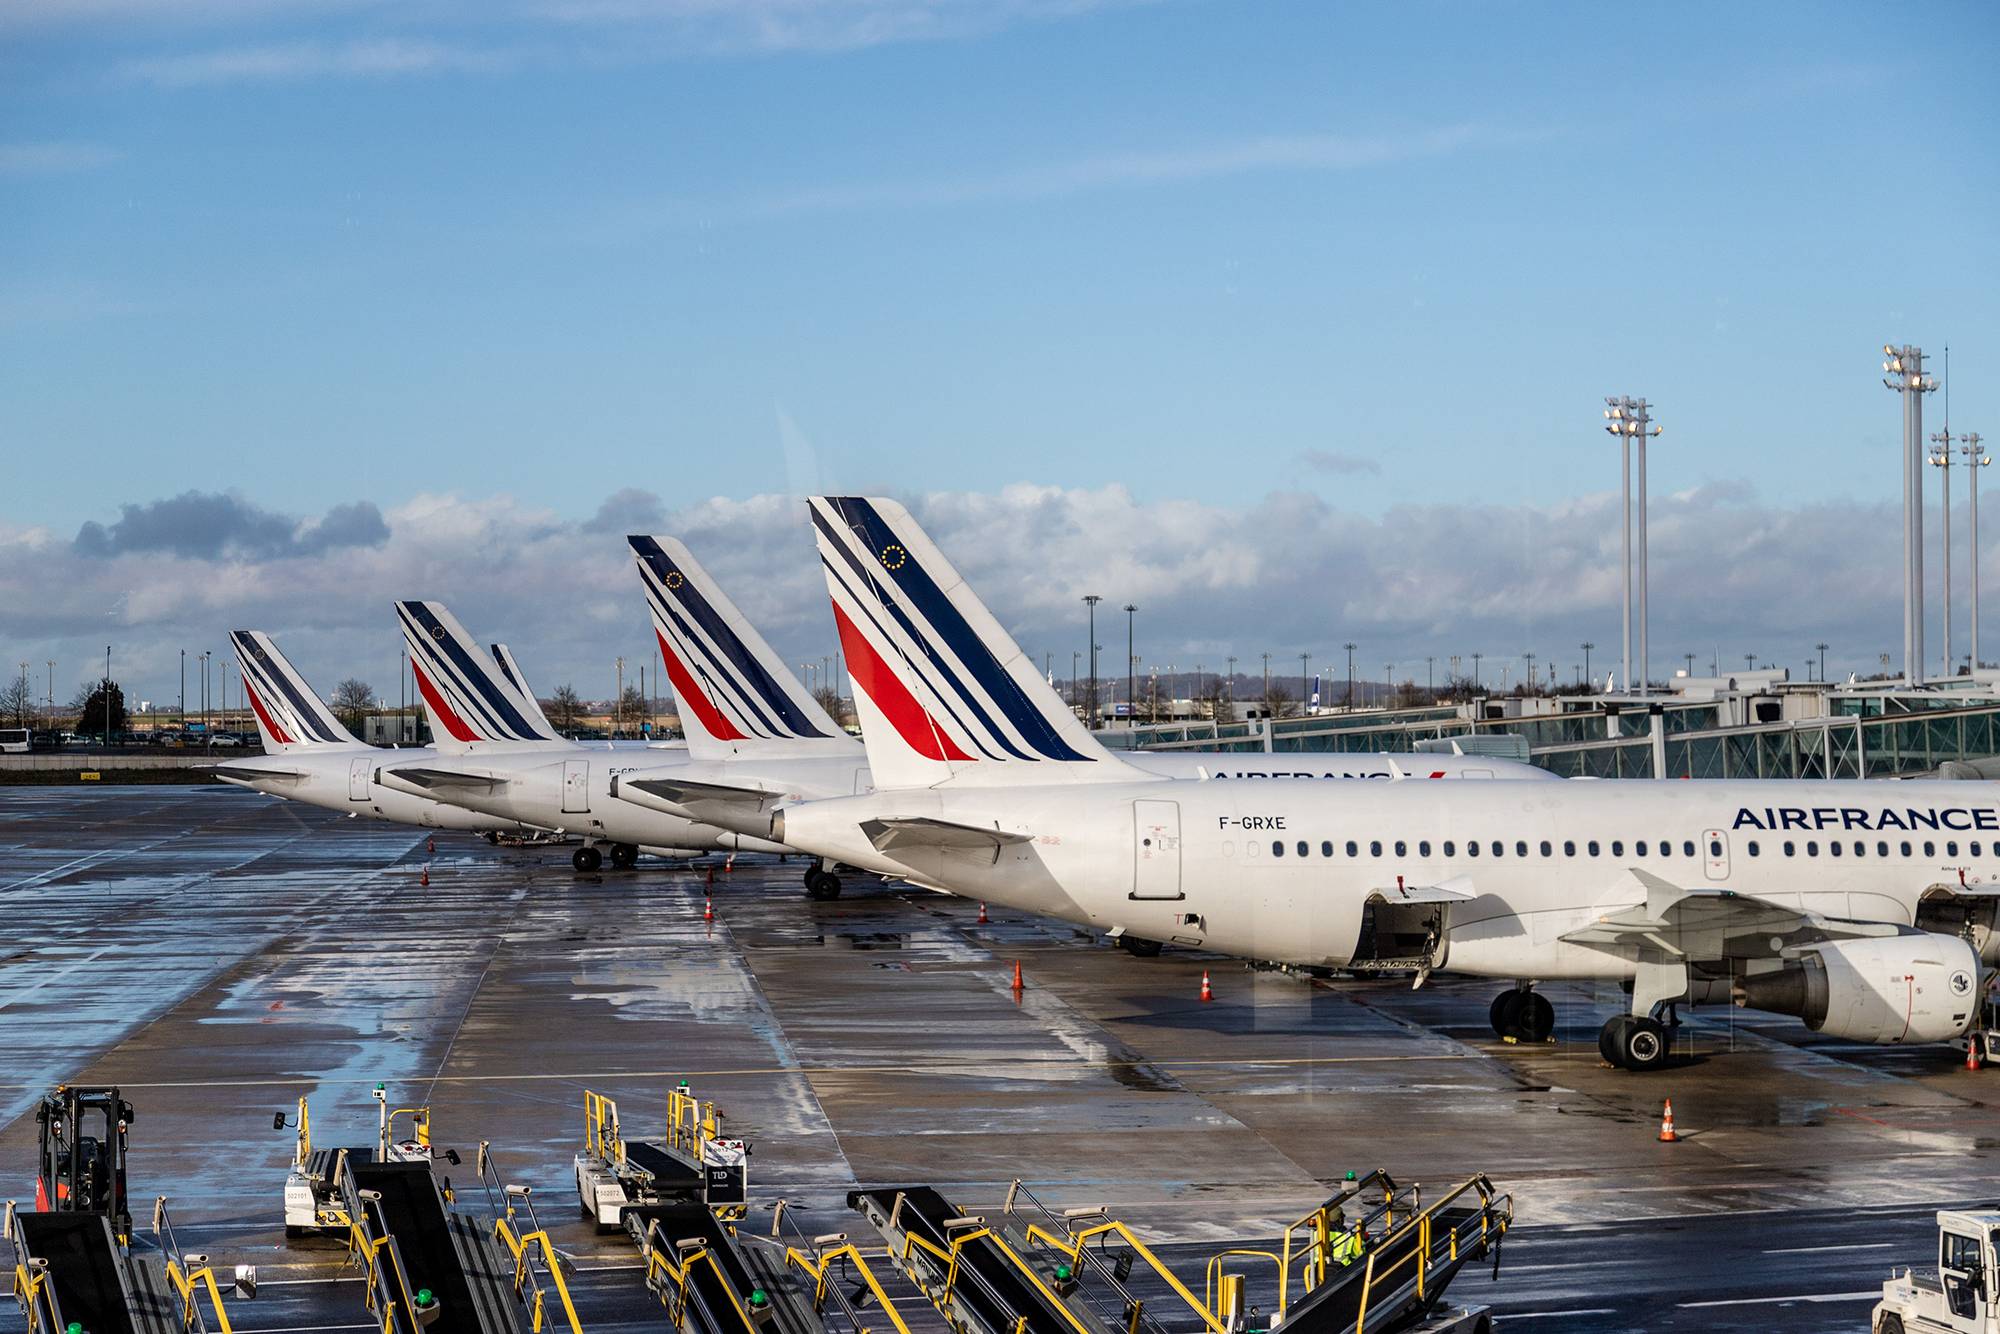 Французская авиакомпания air france: отзывы